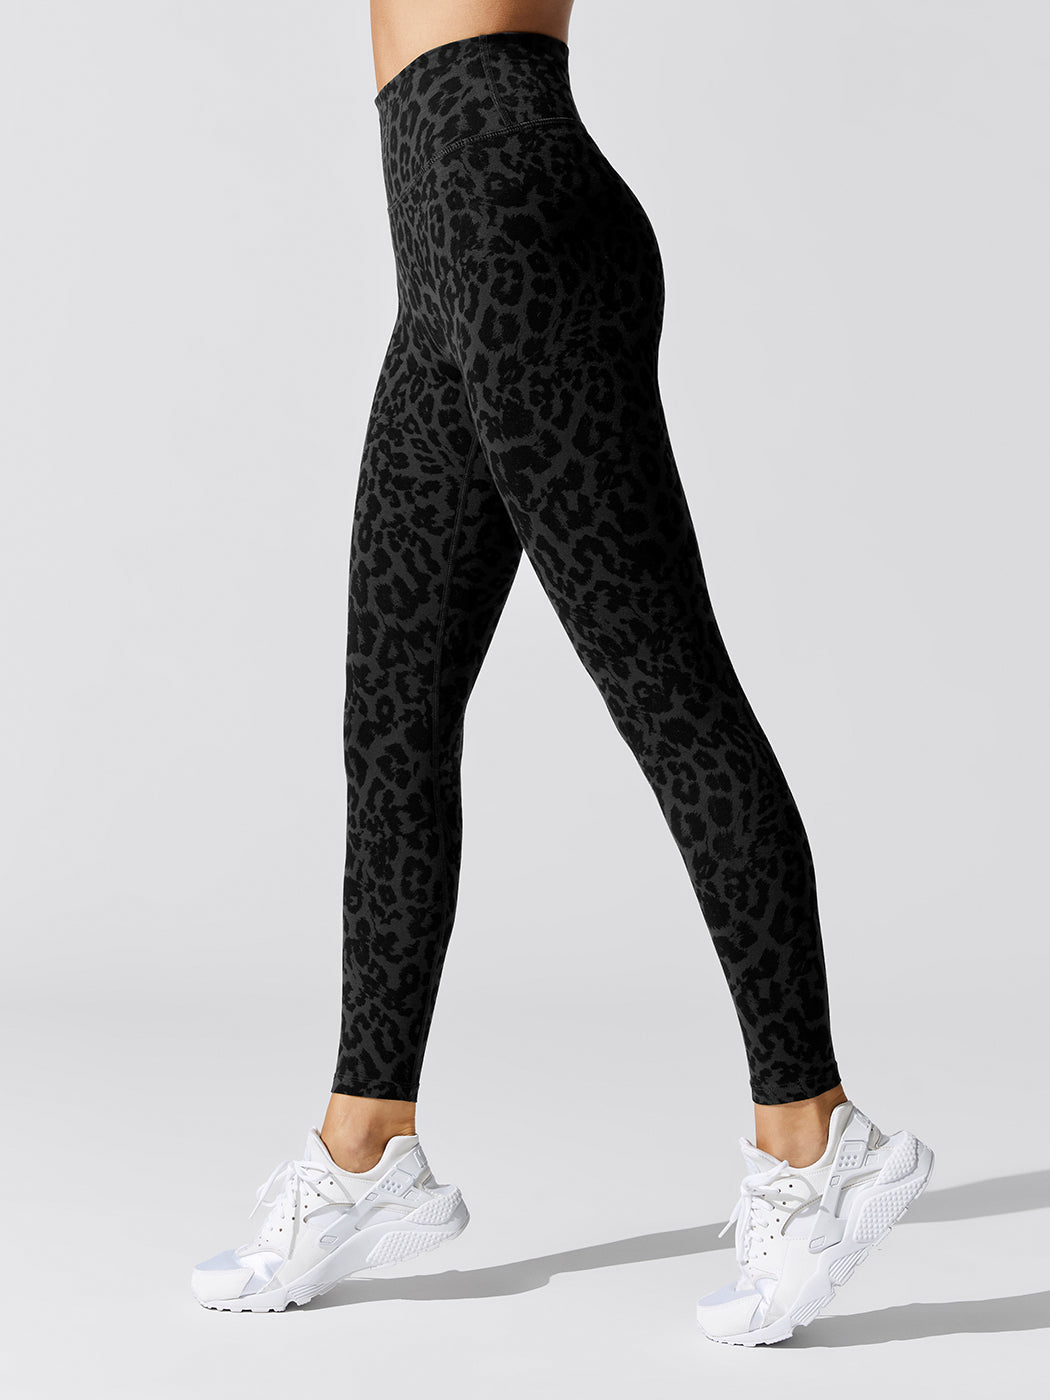 Nike / Little Girls' Leopard Tunic Sweatshirt and Leggings Set